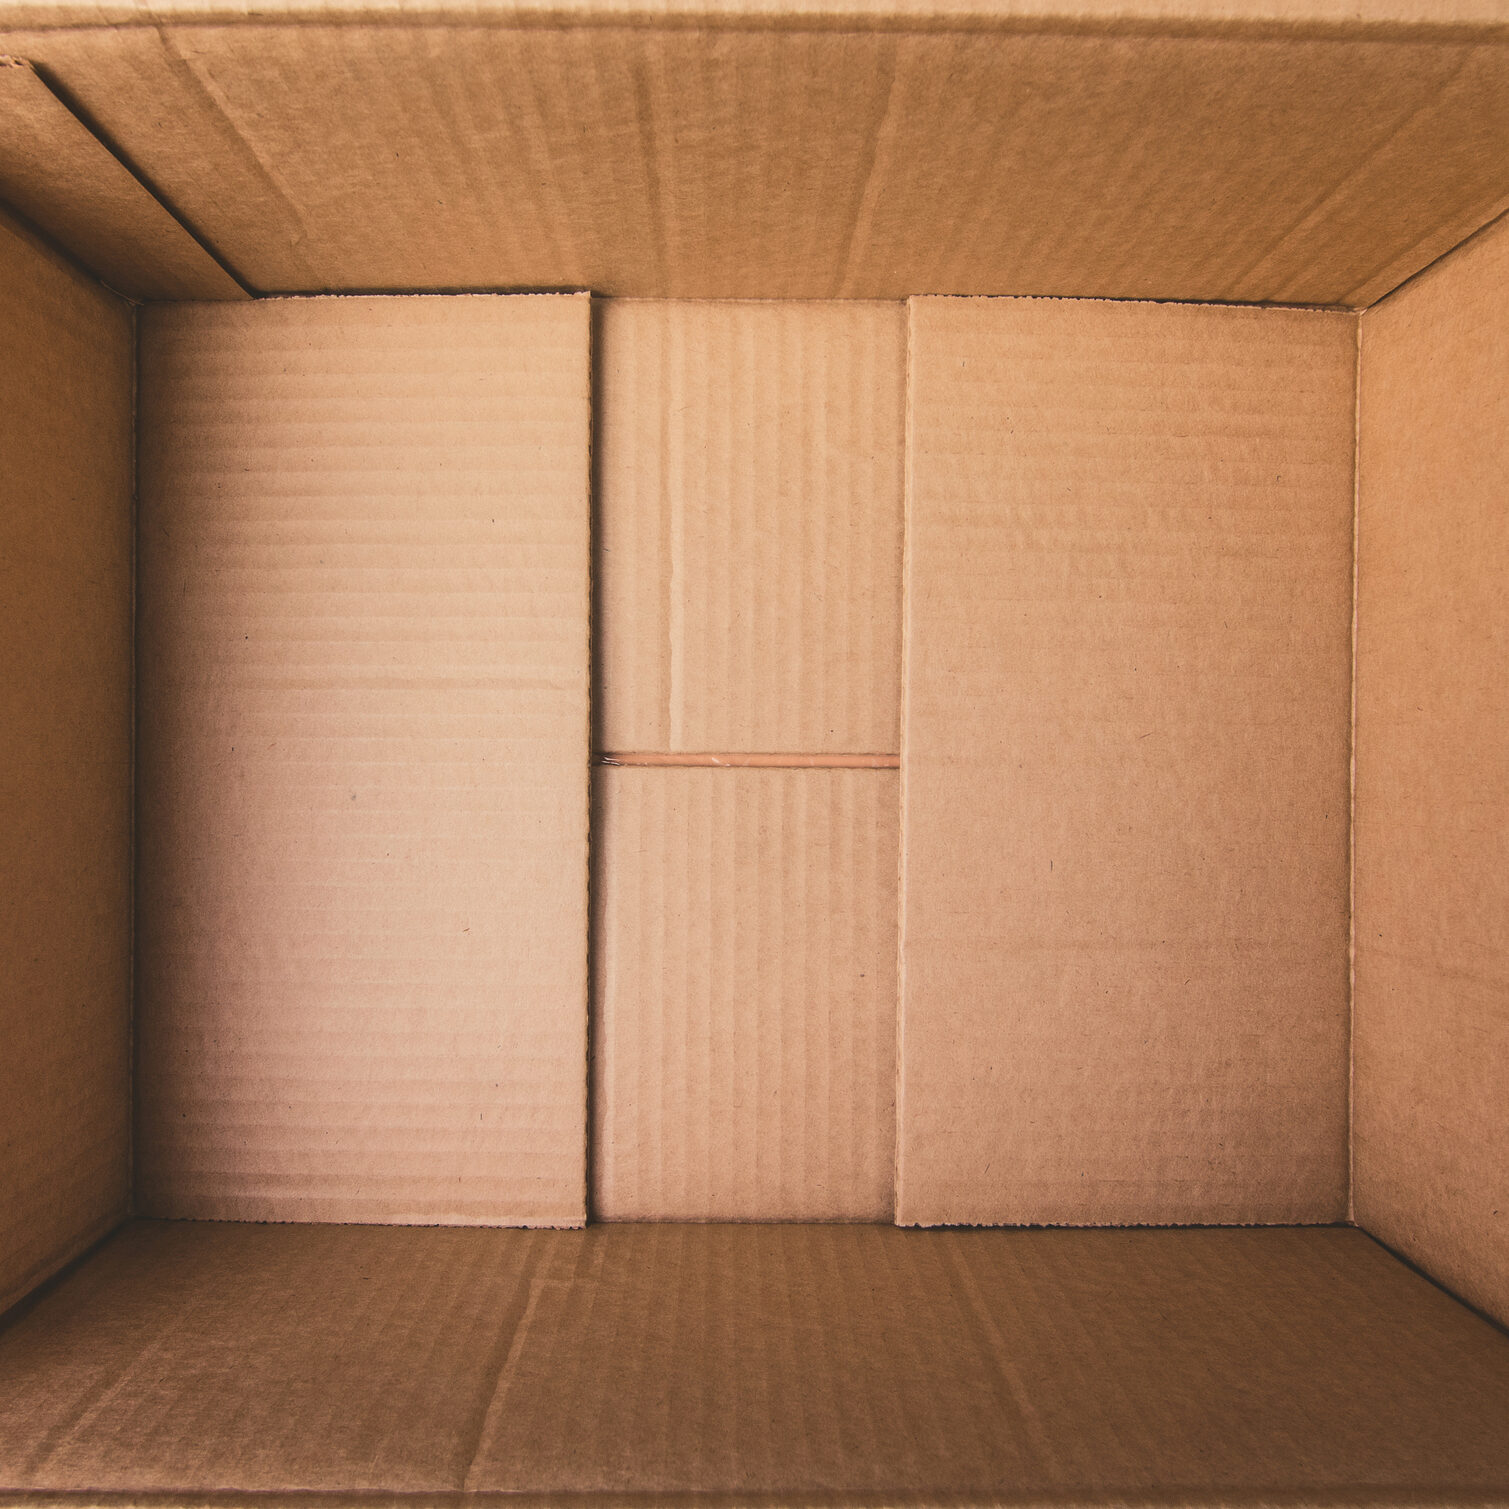 Empty open rectangular cardboard box close up.